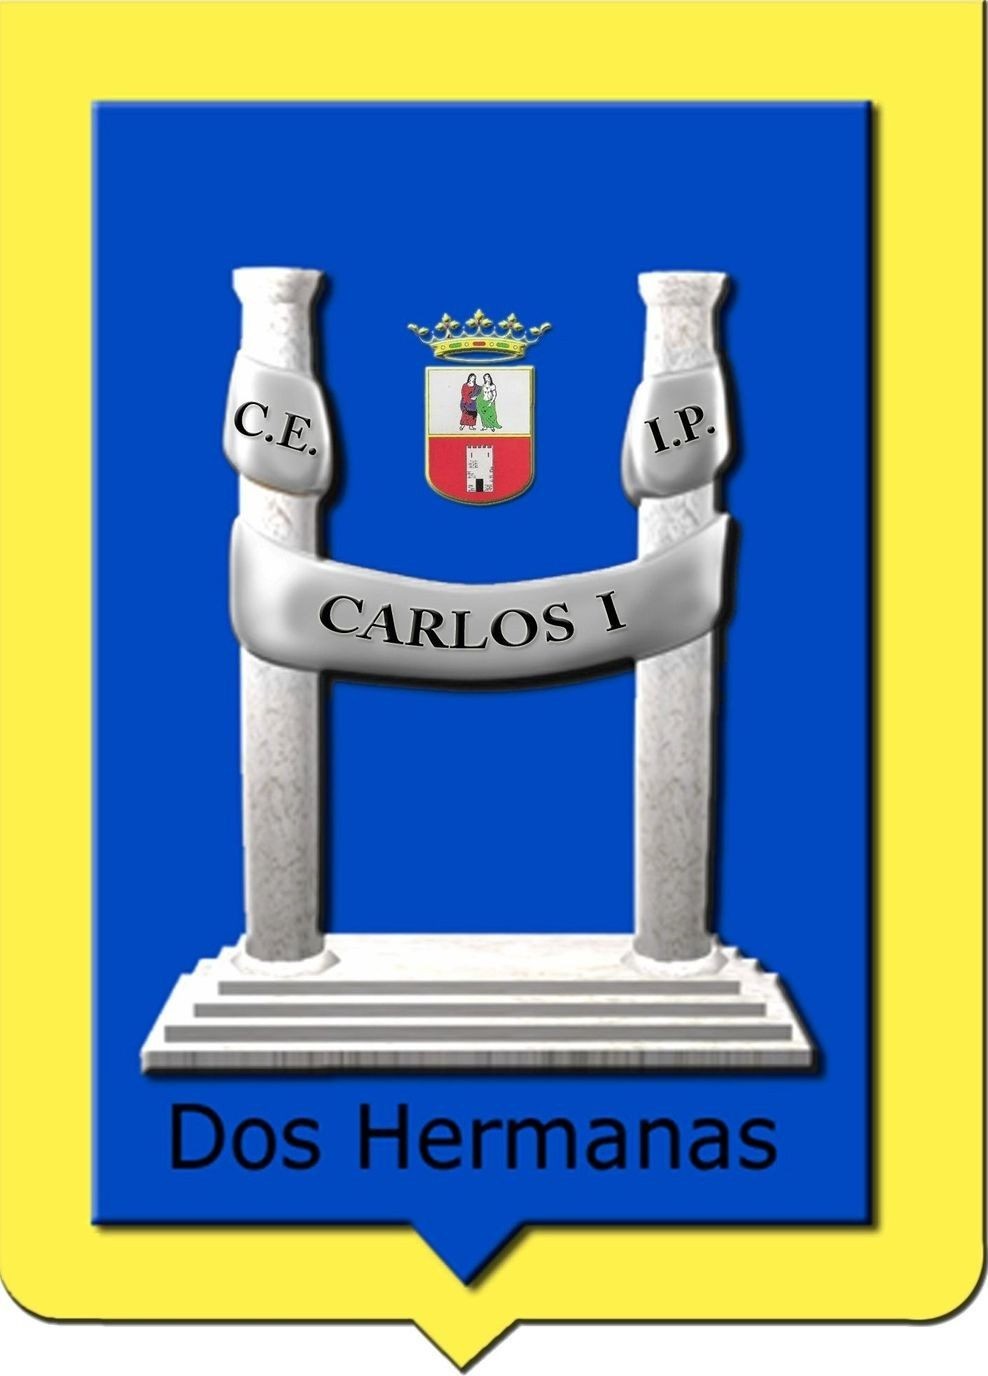 CEIP Carlos I (Dos Hermanas)